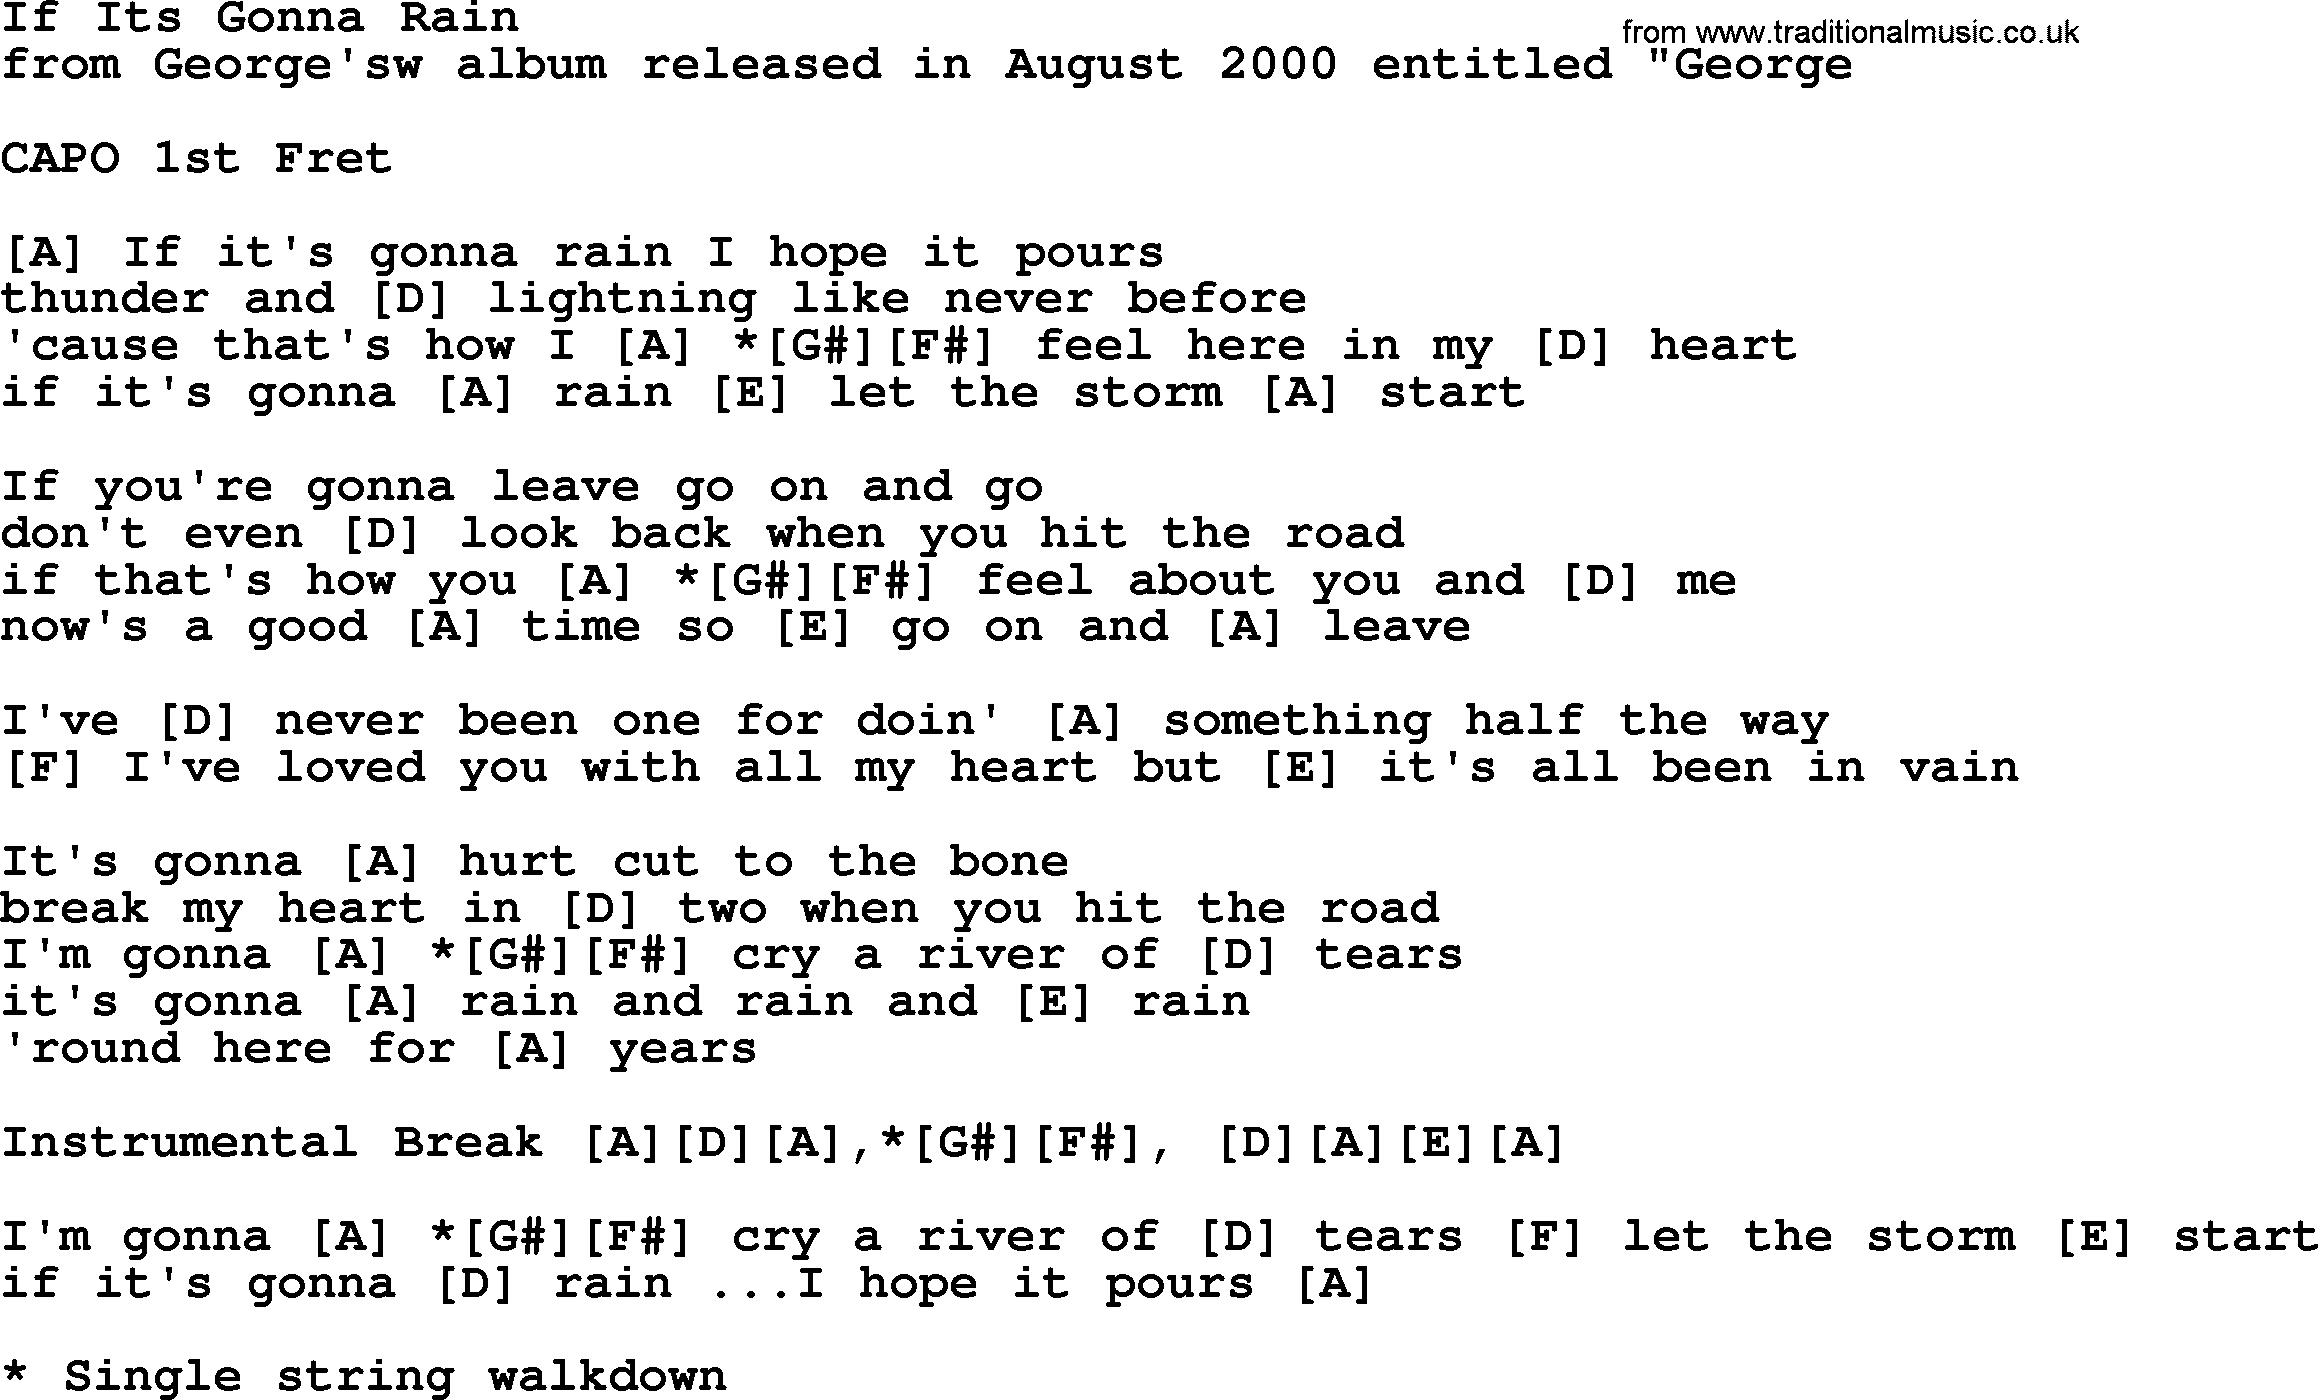 George Strait song: If Its Gonna Rain, lyrics and chords